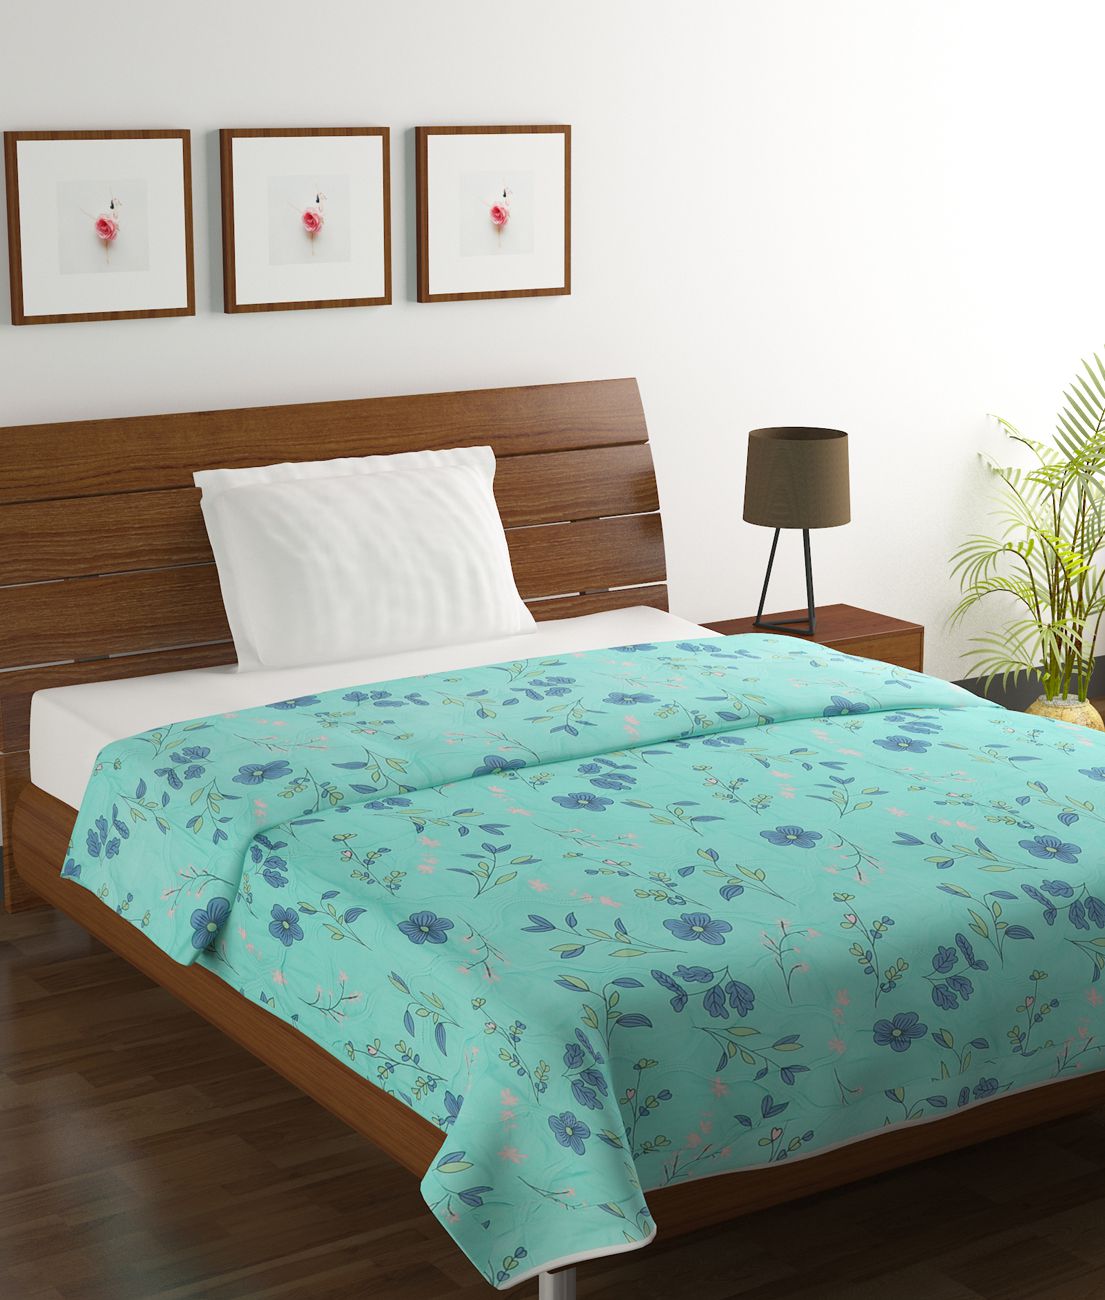     			HOMETALES Microfiber Floral Print Single Comforter ( 150 x 210 cm ) Pack of 1 - Green